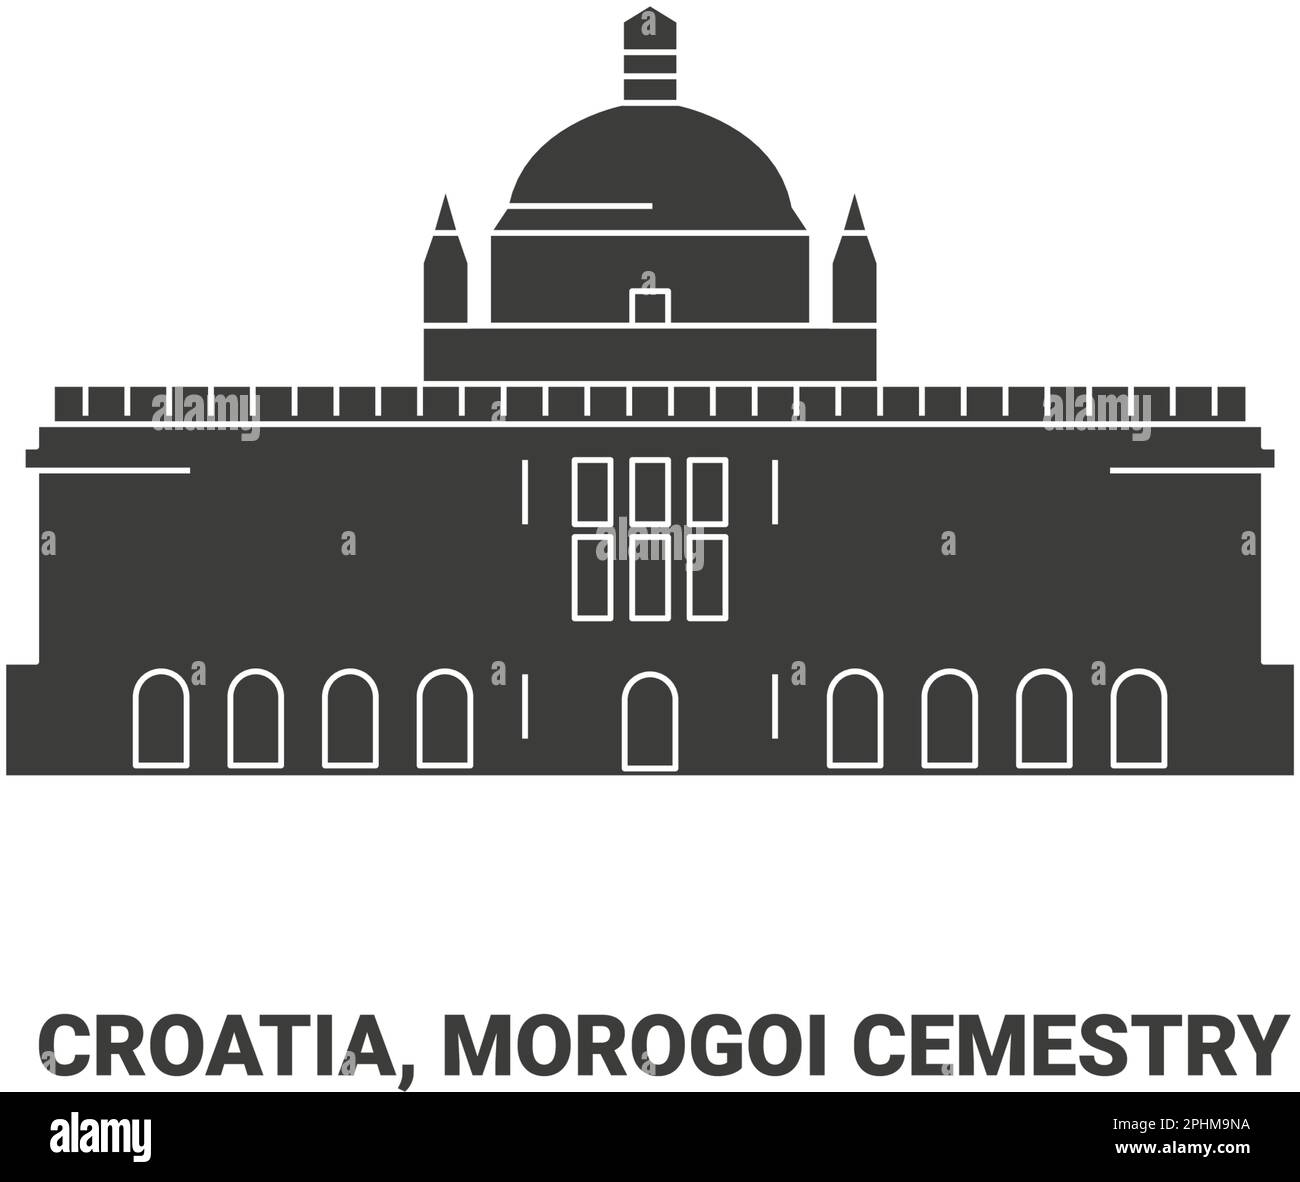 Croatia, Morogoi Cemestry travel landmark vector illustration Stock Vector